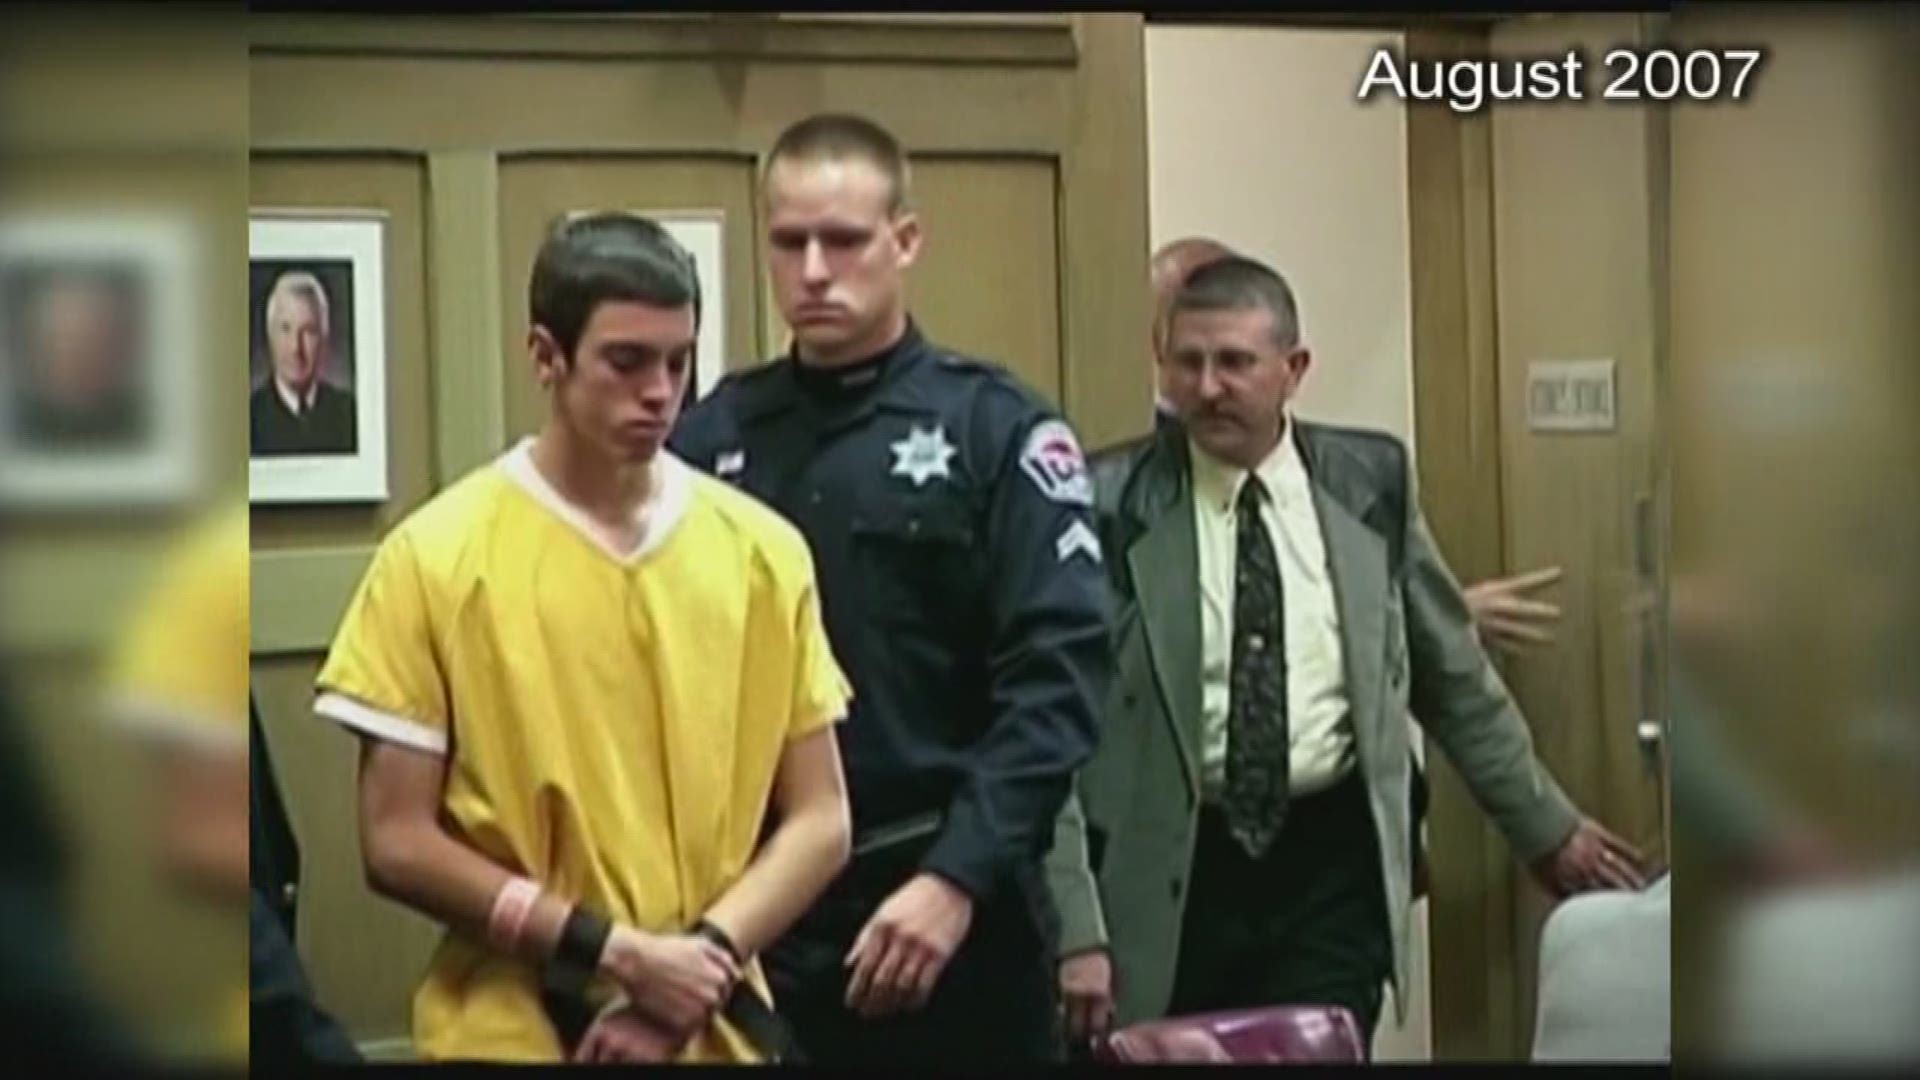 Four Idahoans were convicted as juveniles.